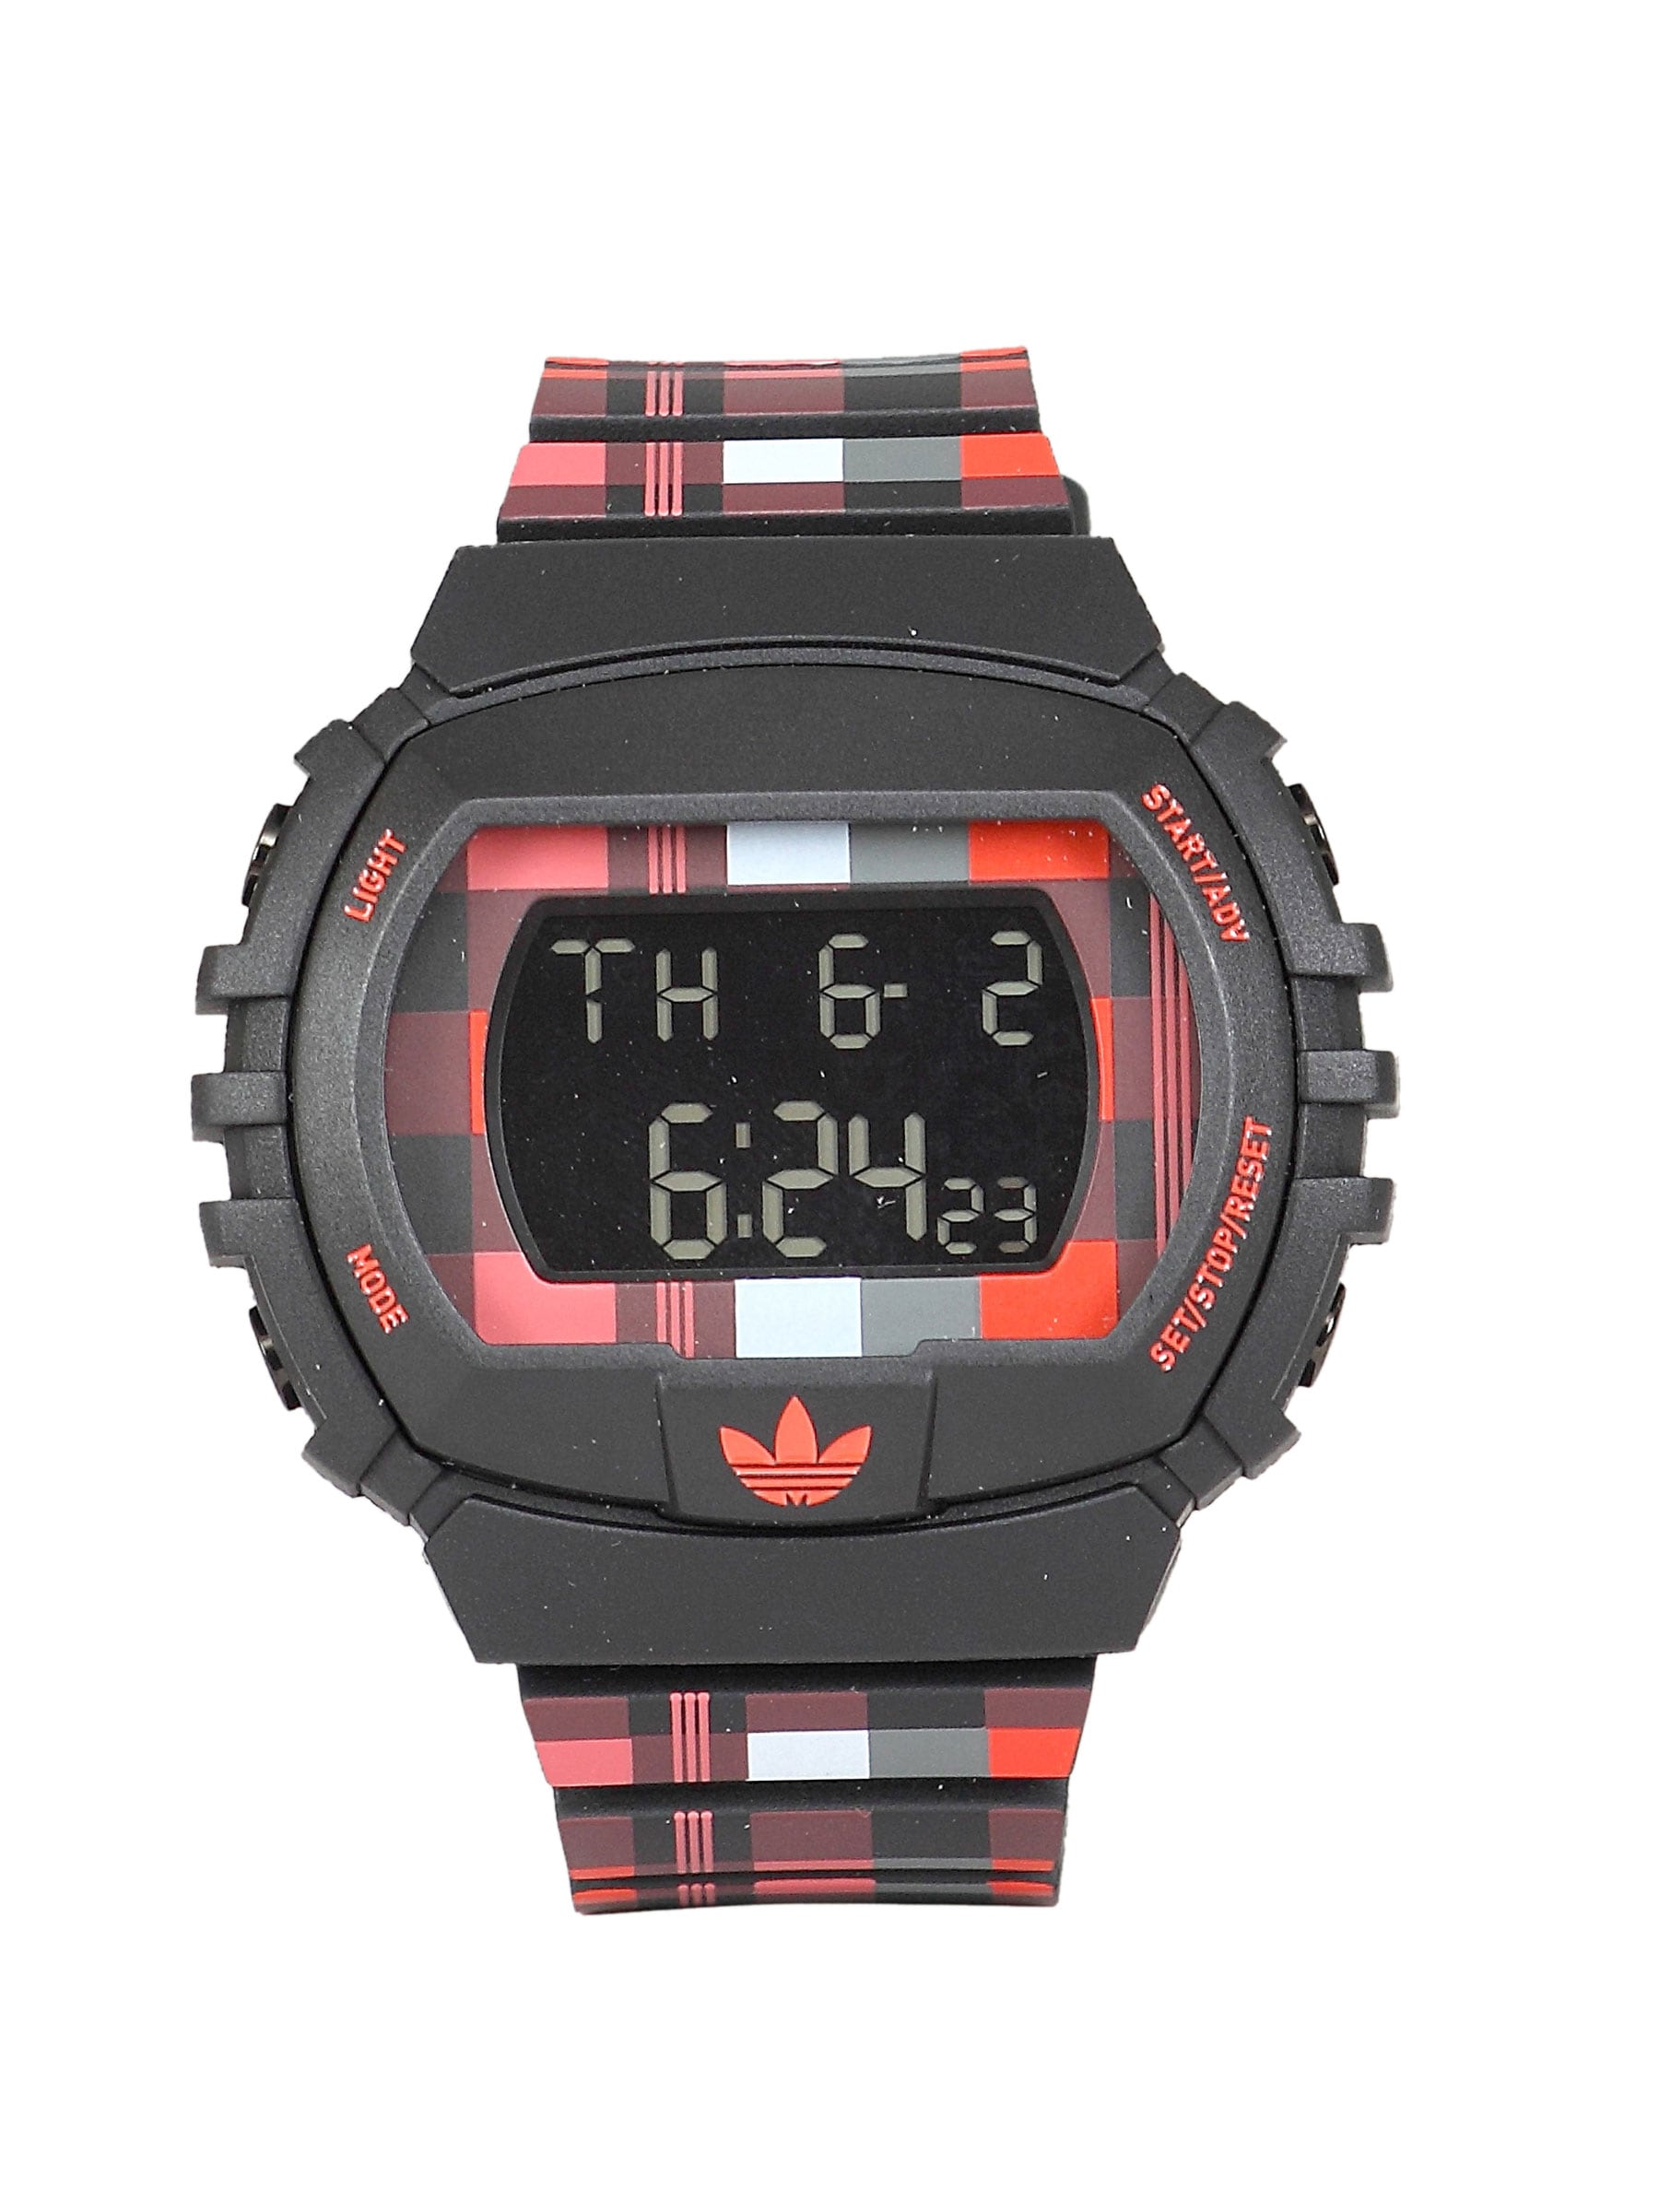 ADIDAS Unisex New York Chronographic Digital Black Red Watch